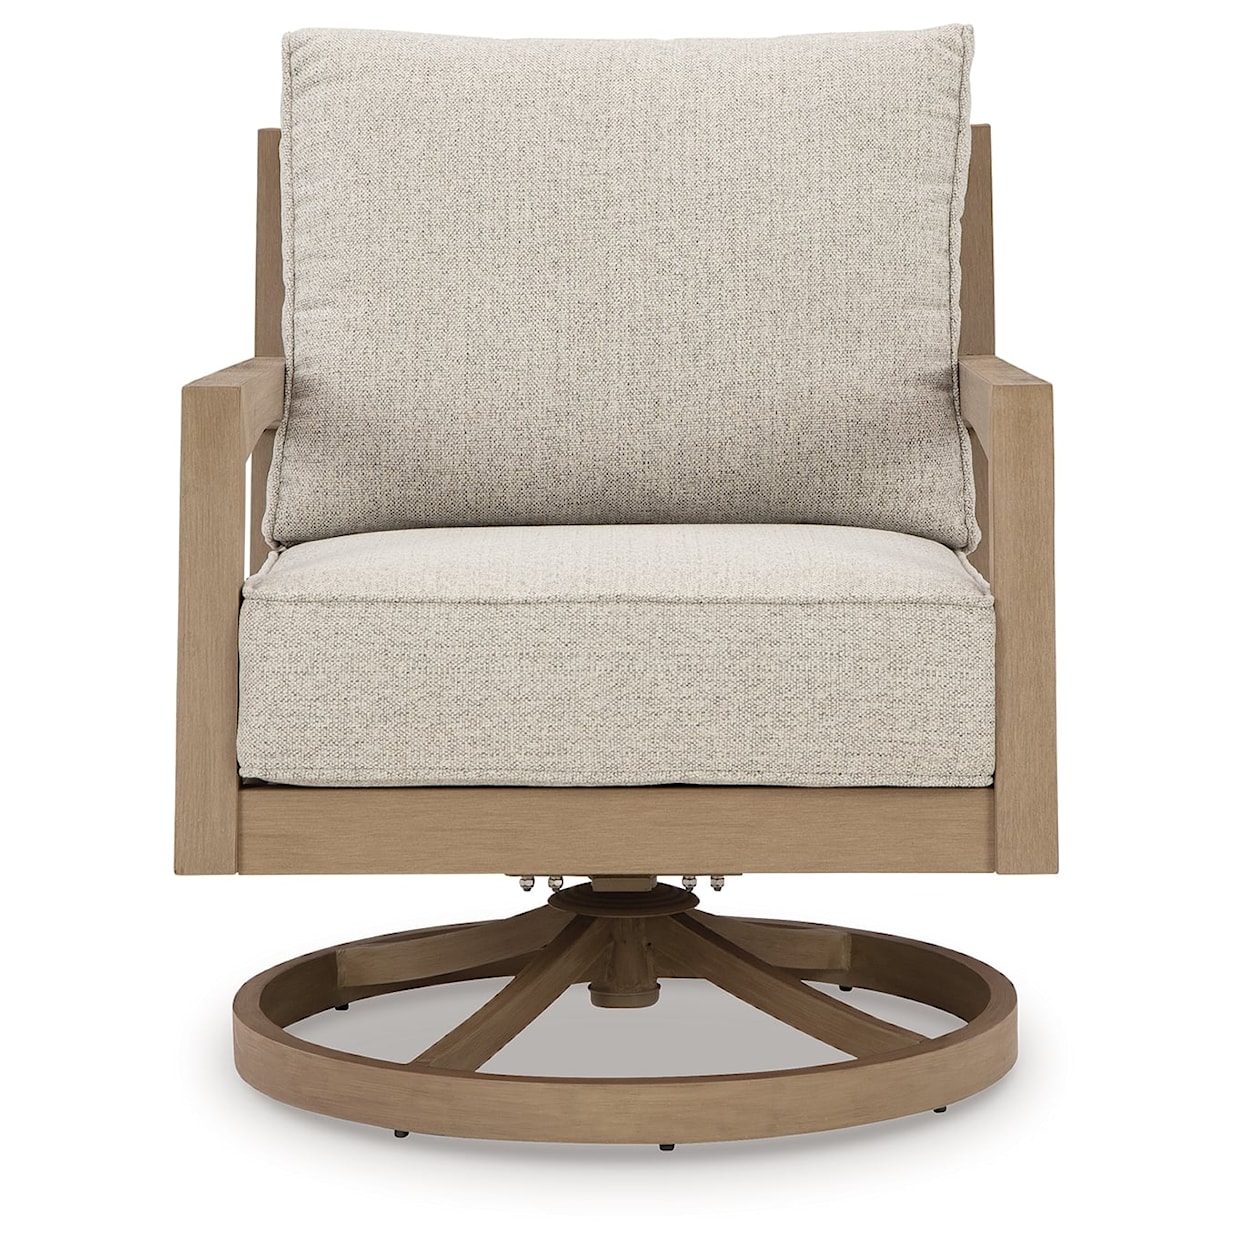 Ashley Furniture Signature Design Hallow Creek Outdoor Swivel Lounge w/ Cushion